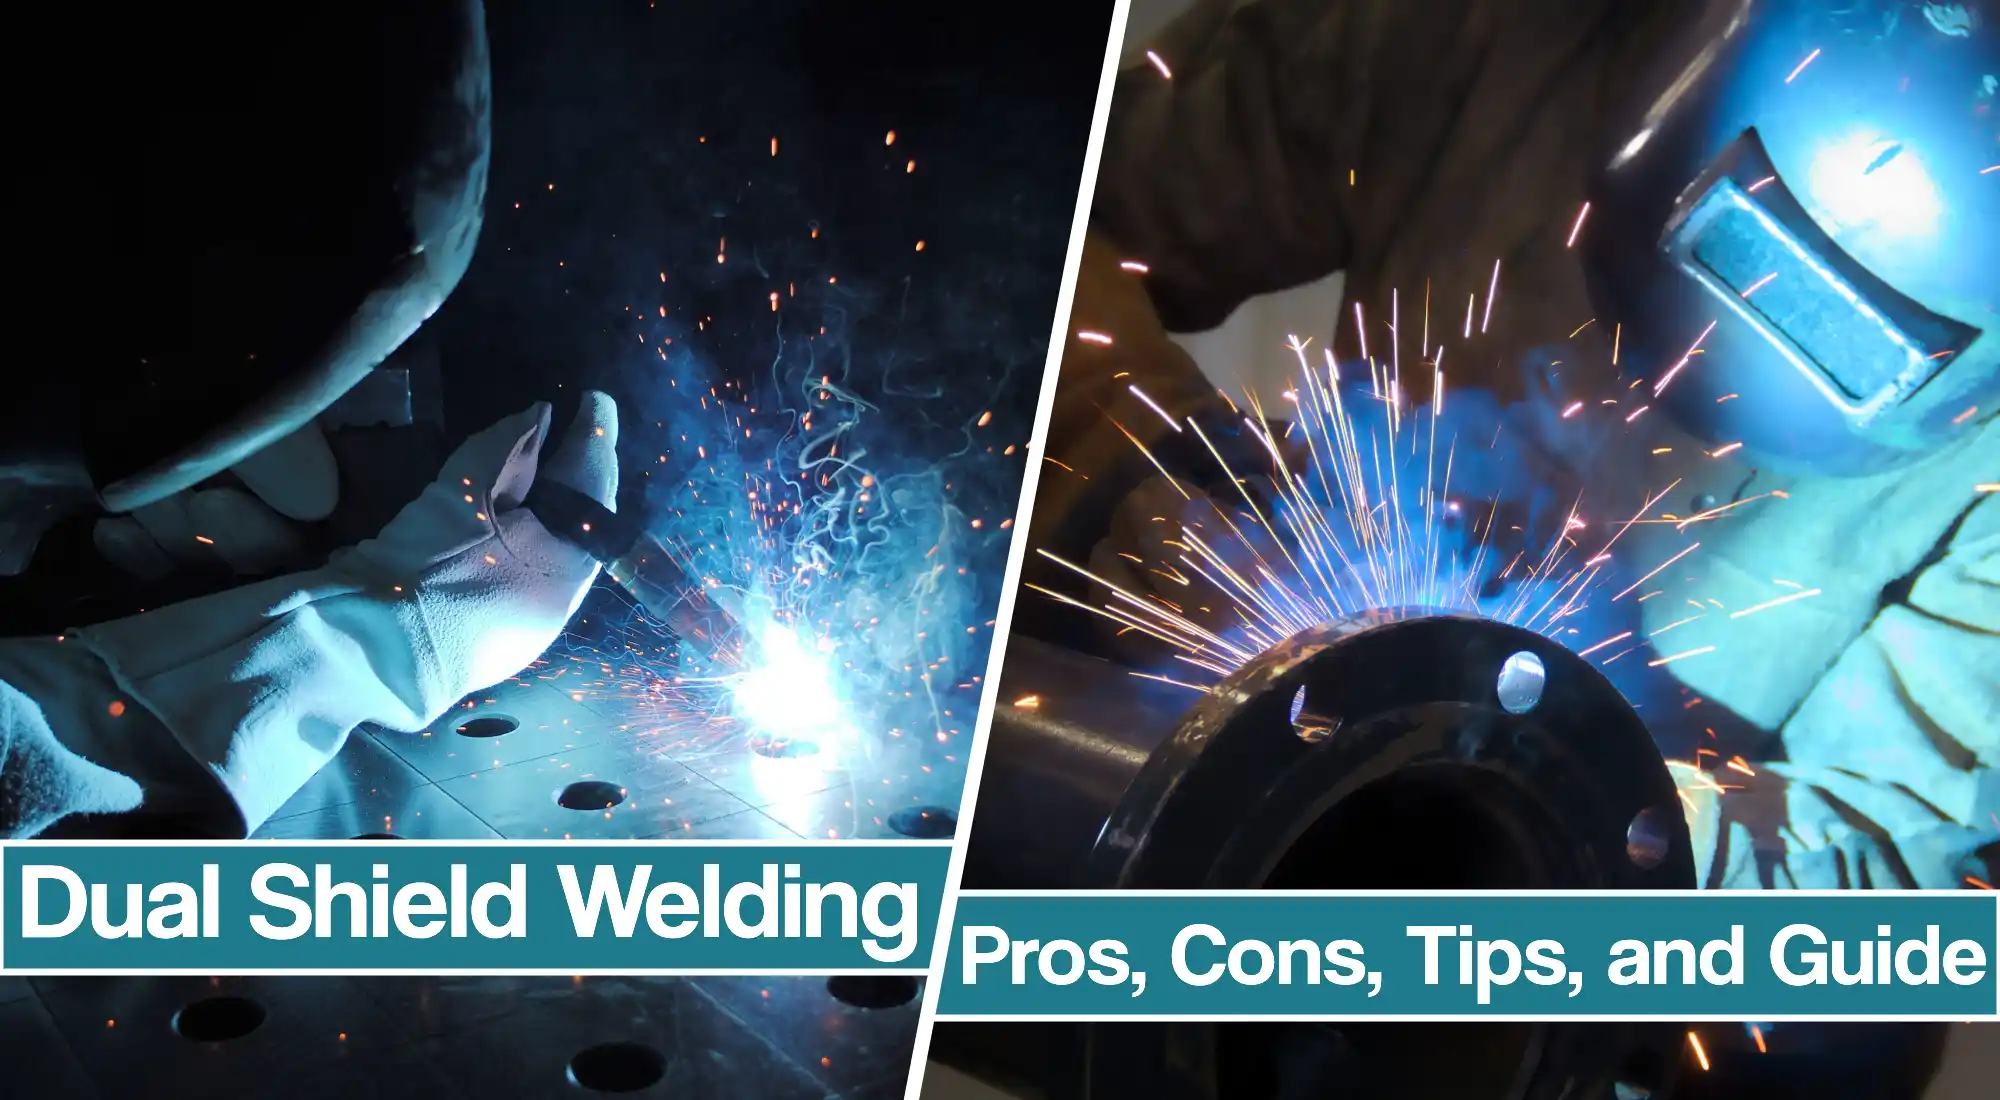 Dual shield welding – Fundamentals, Tips, Tricks, Pros & Cons